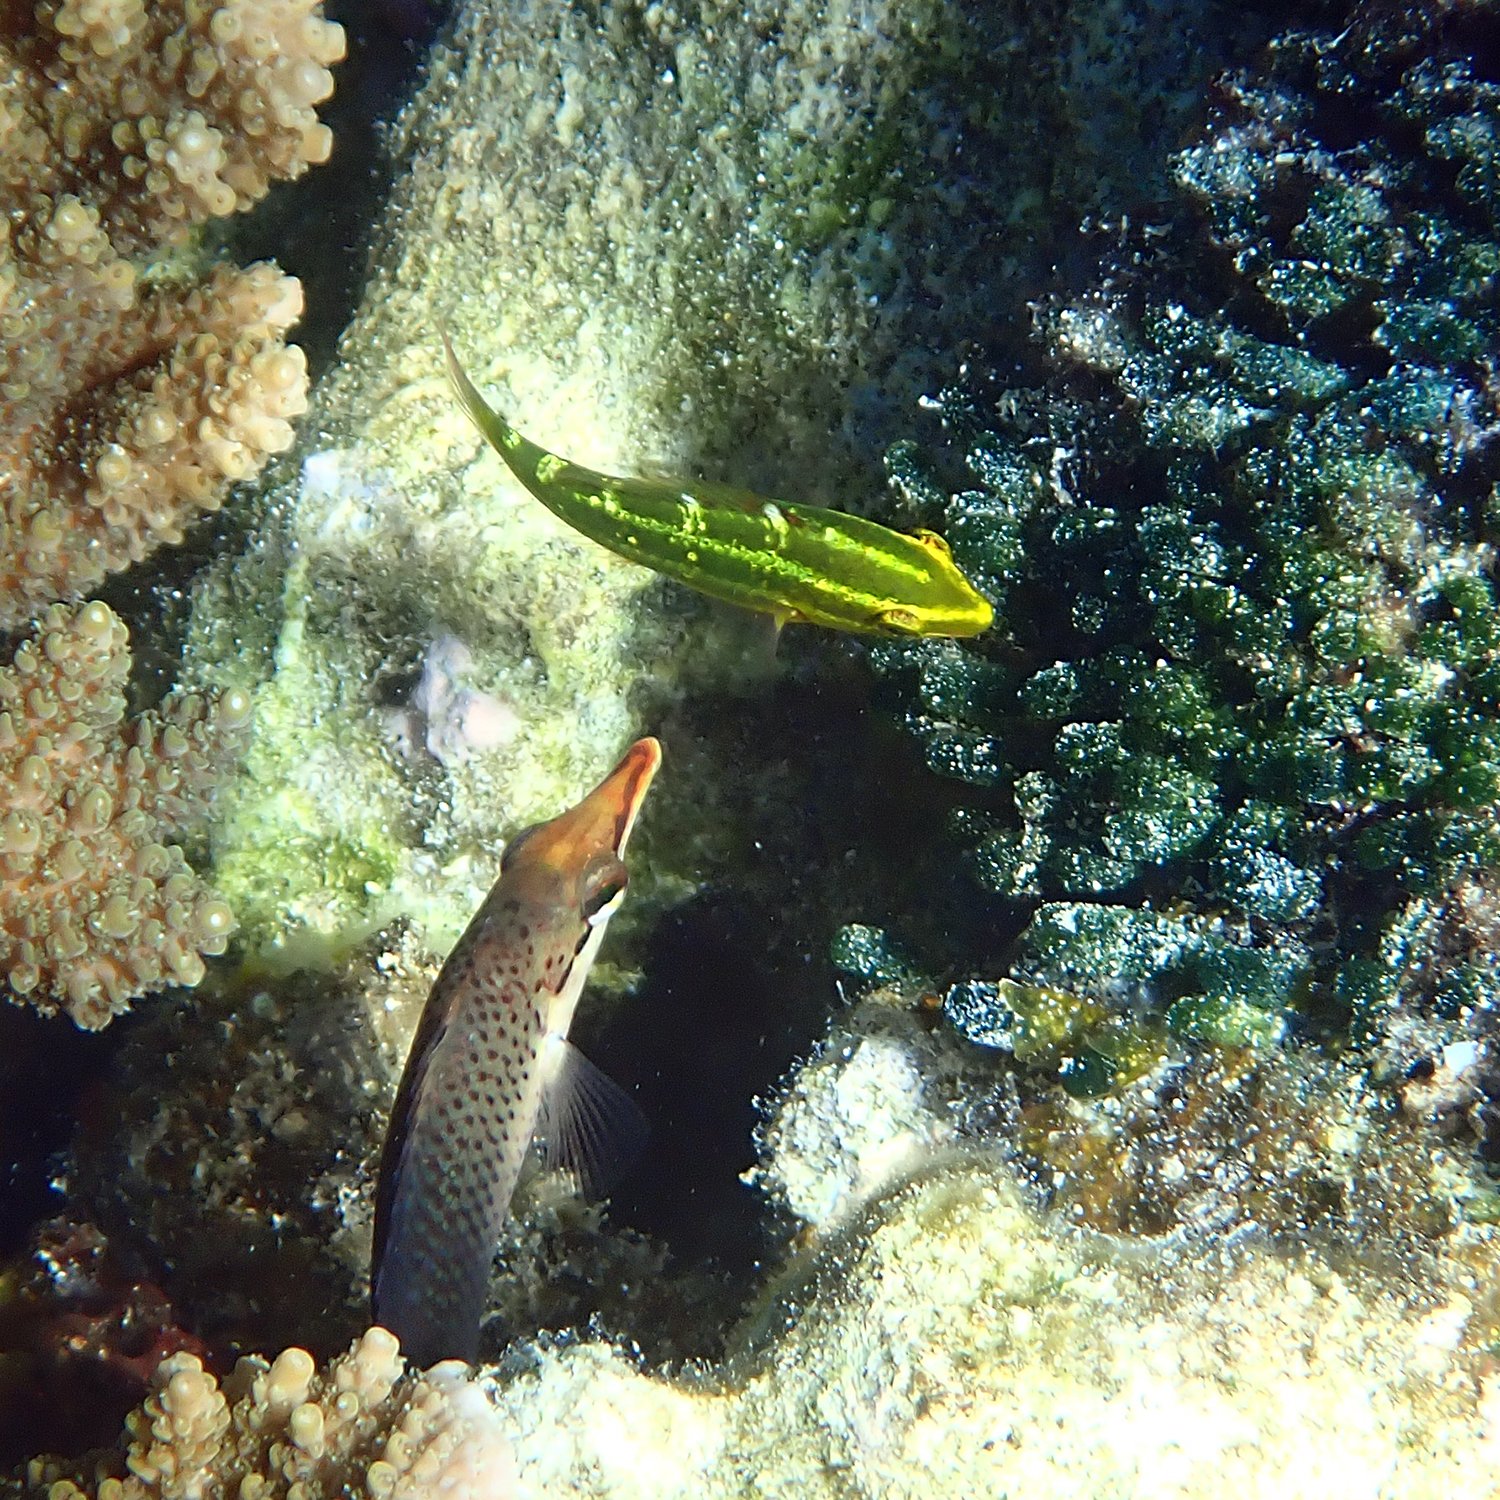 Sixband parrotfish - Scarus frenatus